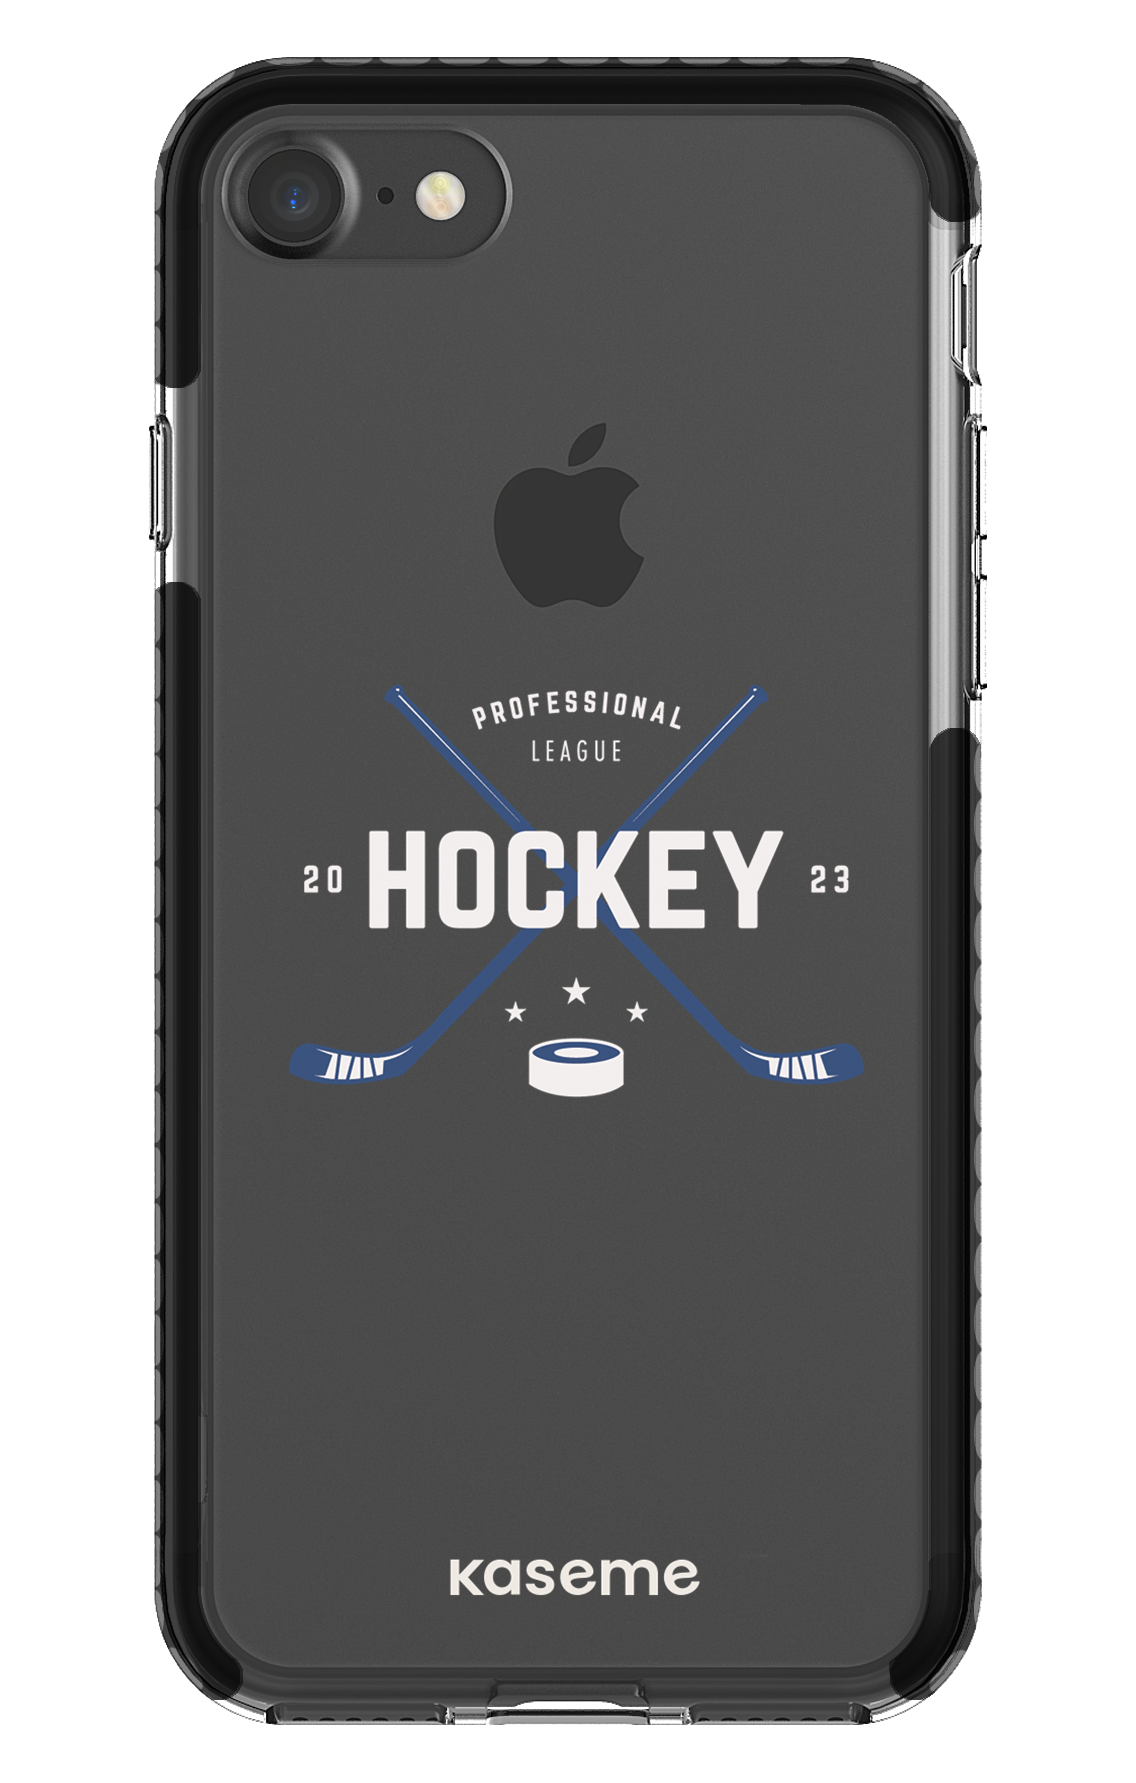 Playoffs clear case - iPhone 7